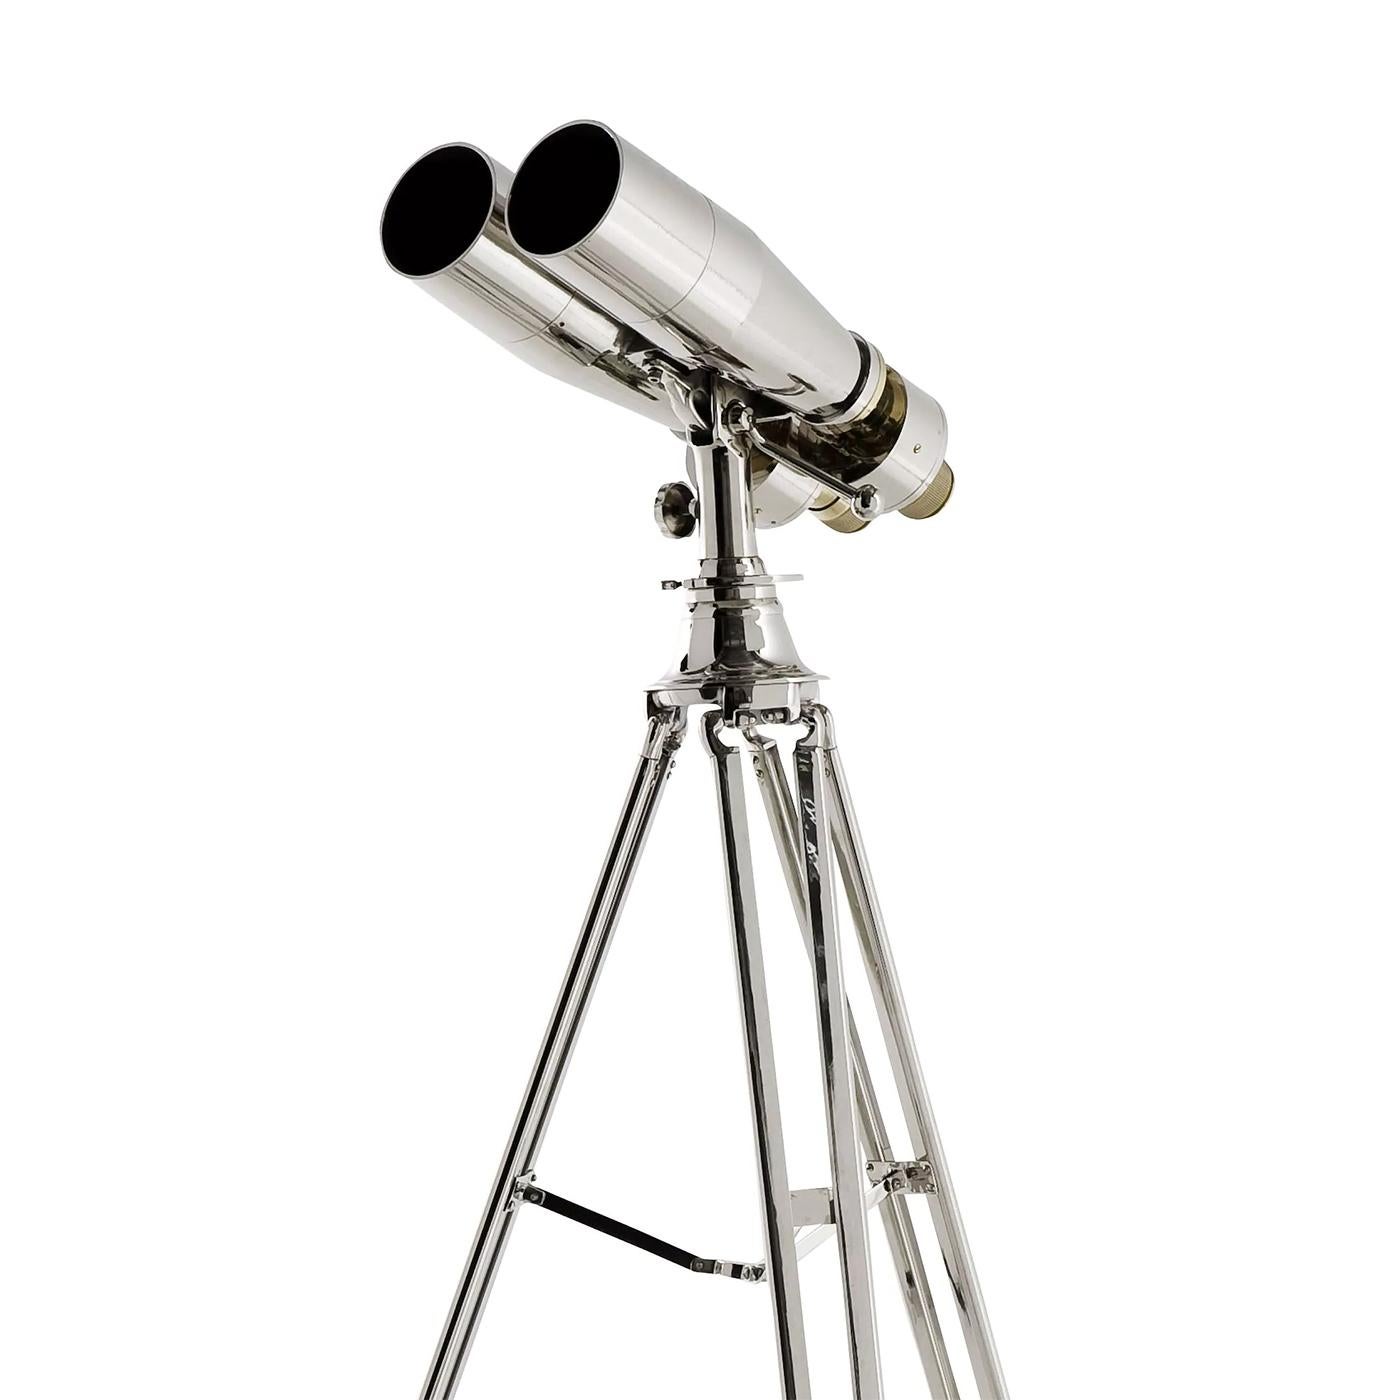 Binoculars Navy with polished steel adjustable tripod base.
With polished aluminium and steel binoculars with glass lens,
magnifying x12. Adjustable height.